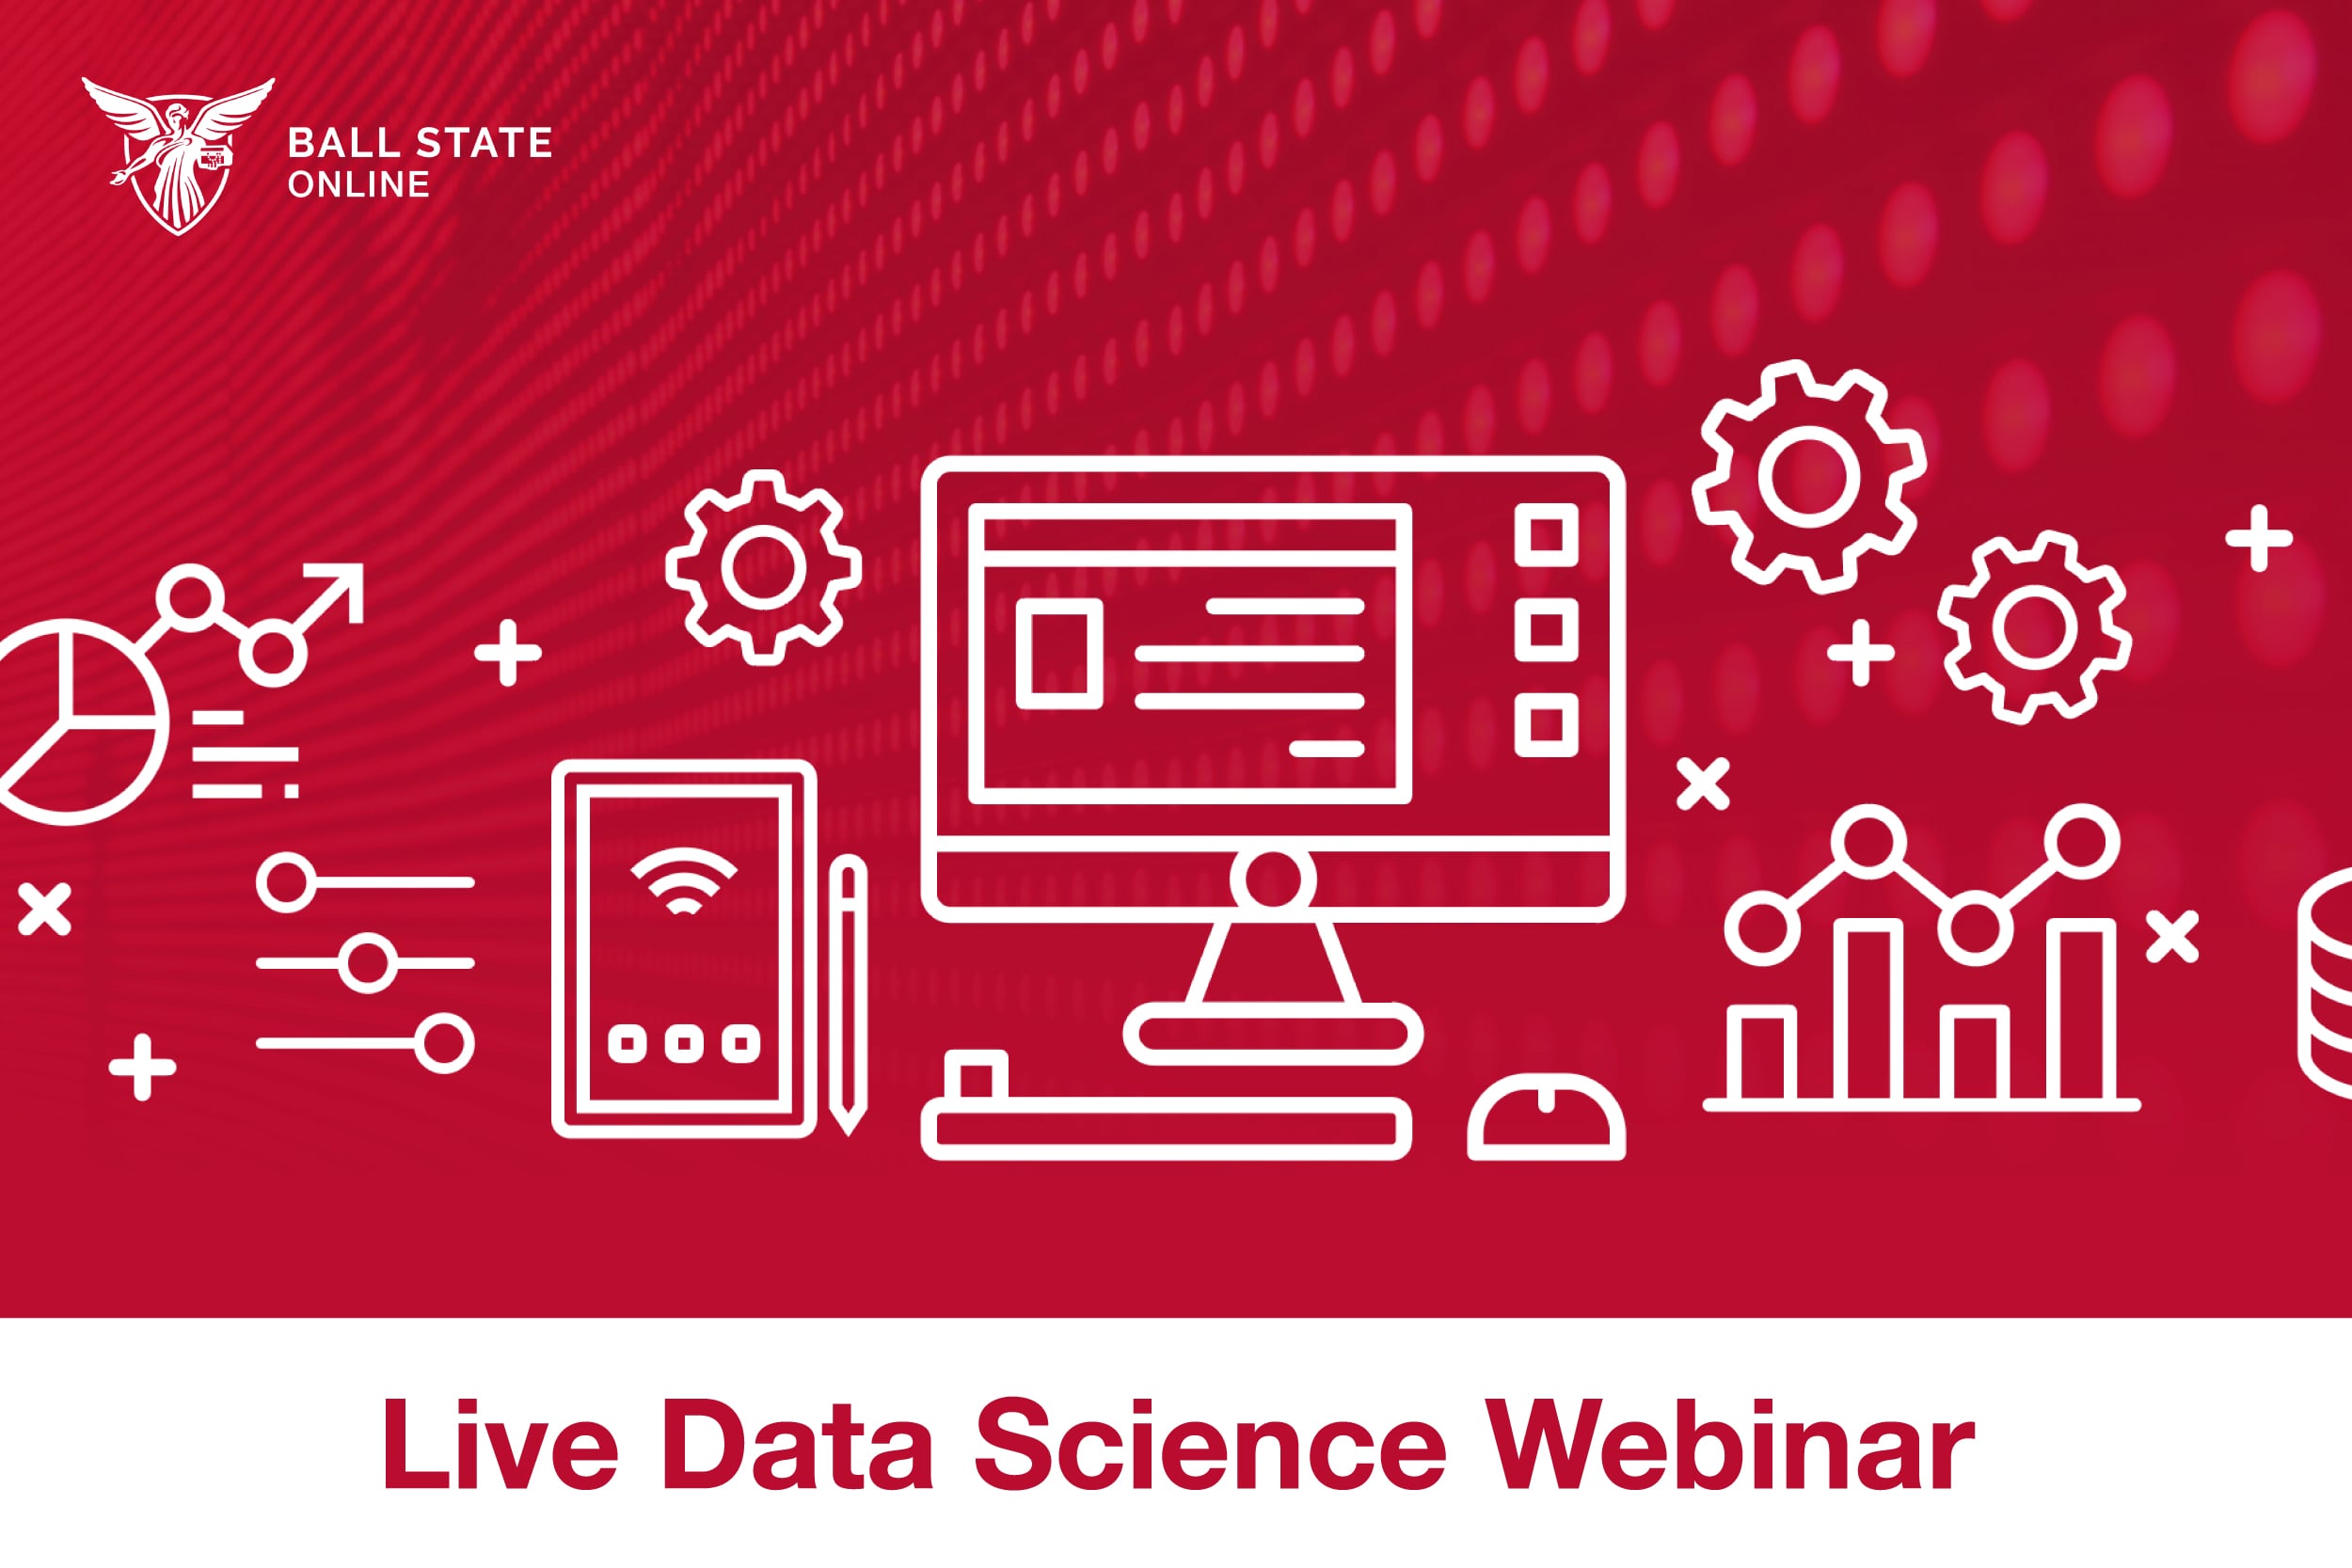 Ball State Online - Data Science webinar